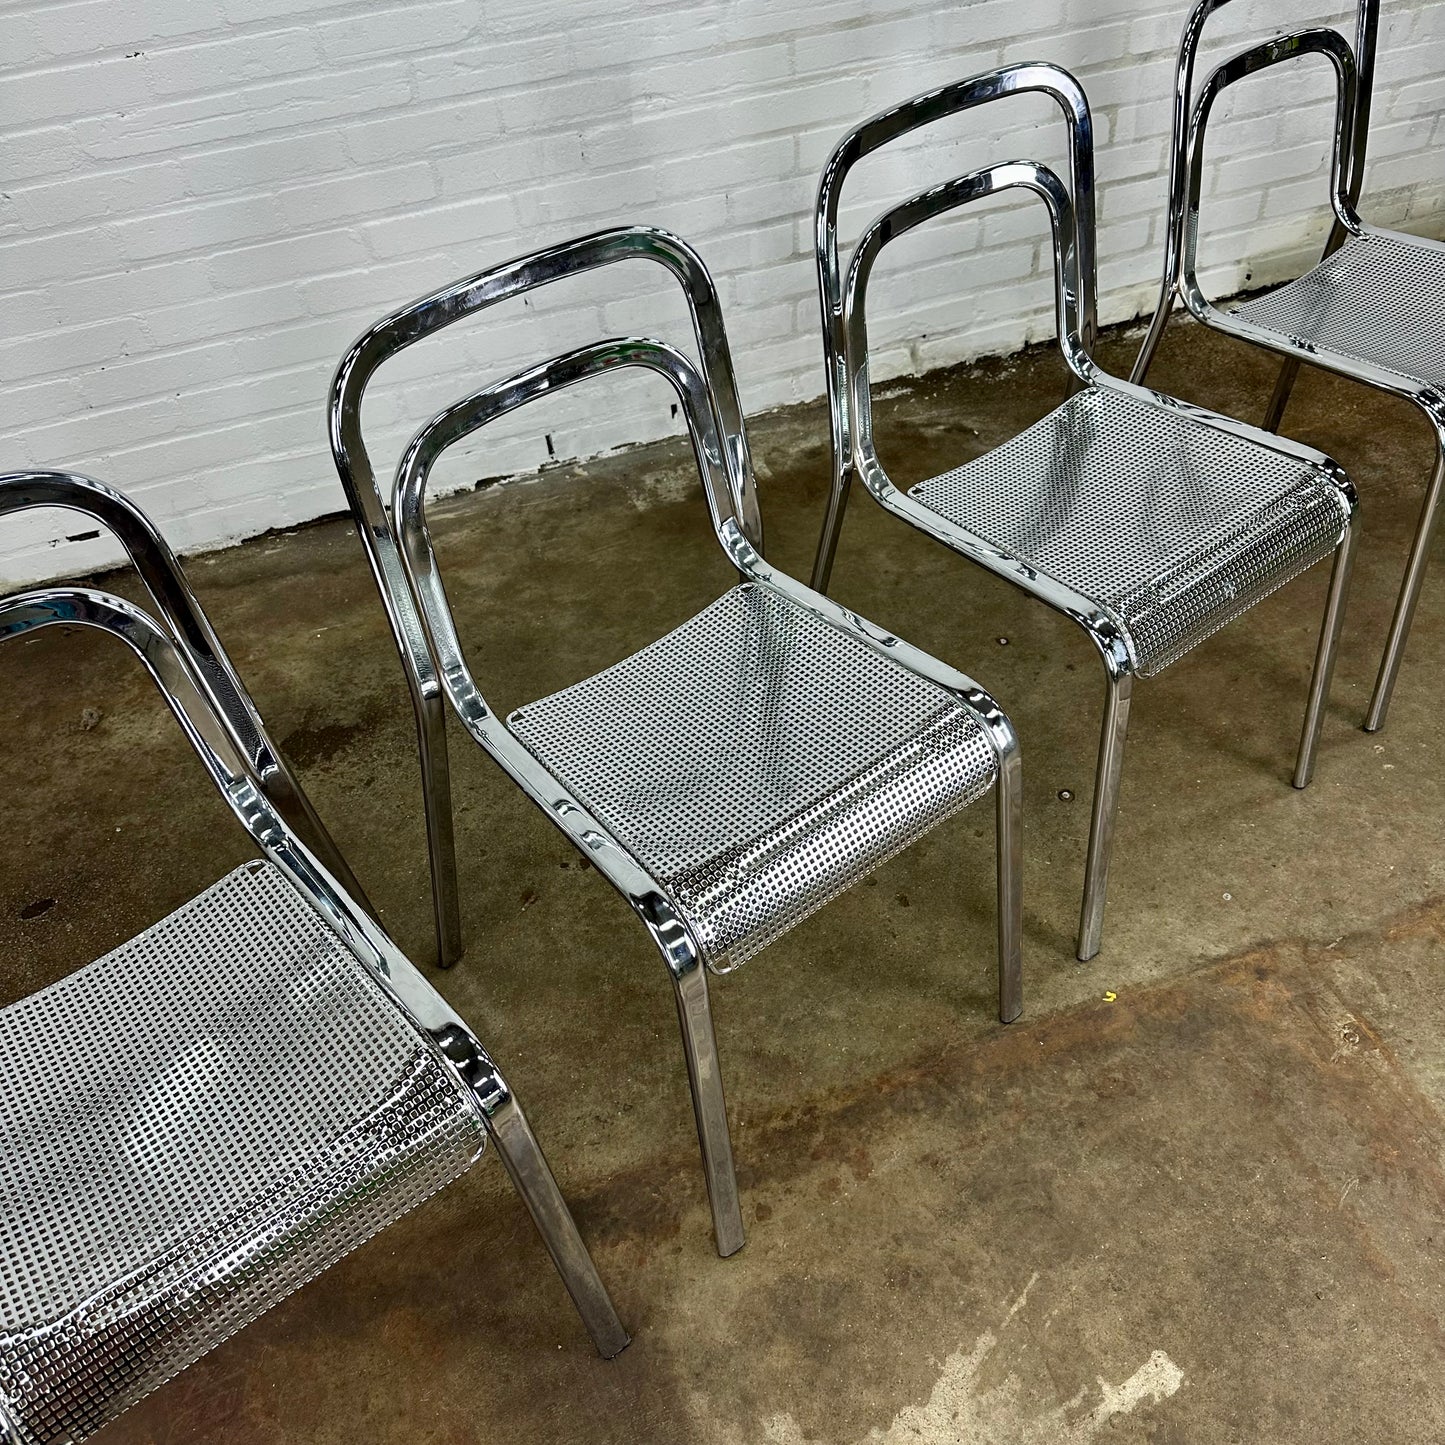 Minimalist Italian Arrben chairs - set of 4